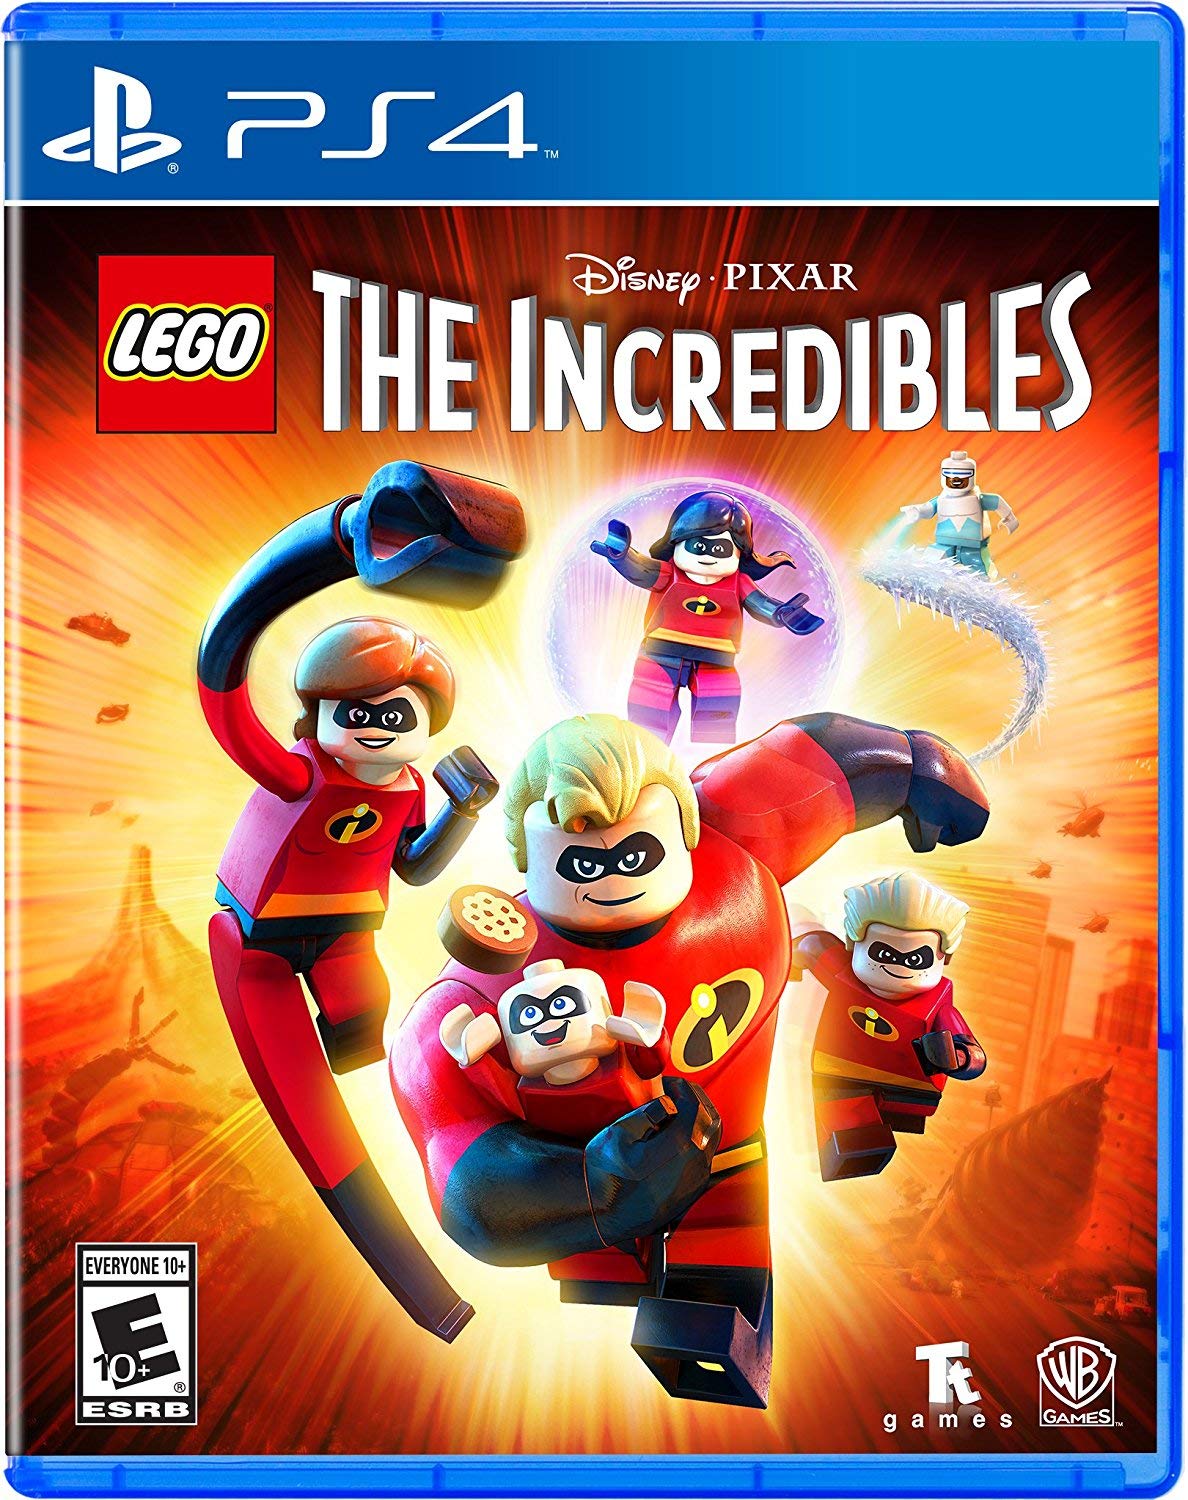 LEGO Disney Pixar's The Incredibles - Nintendo Switch